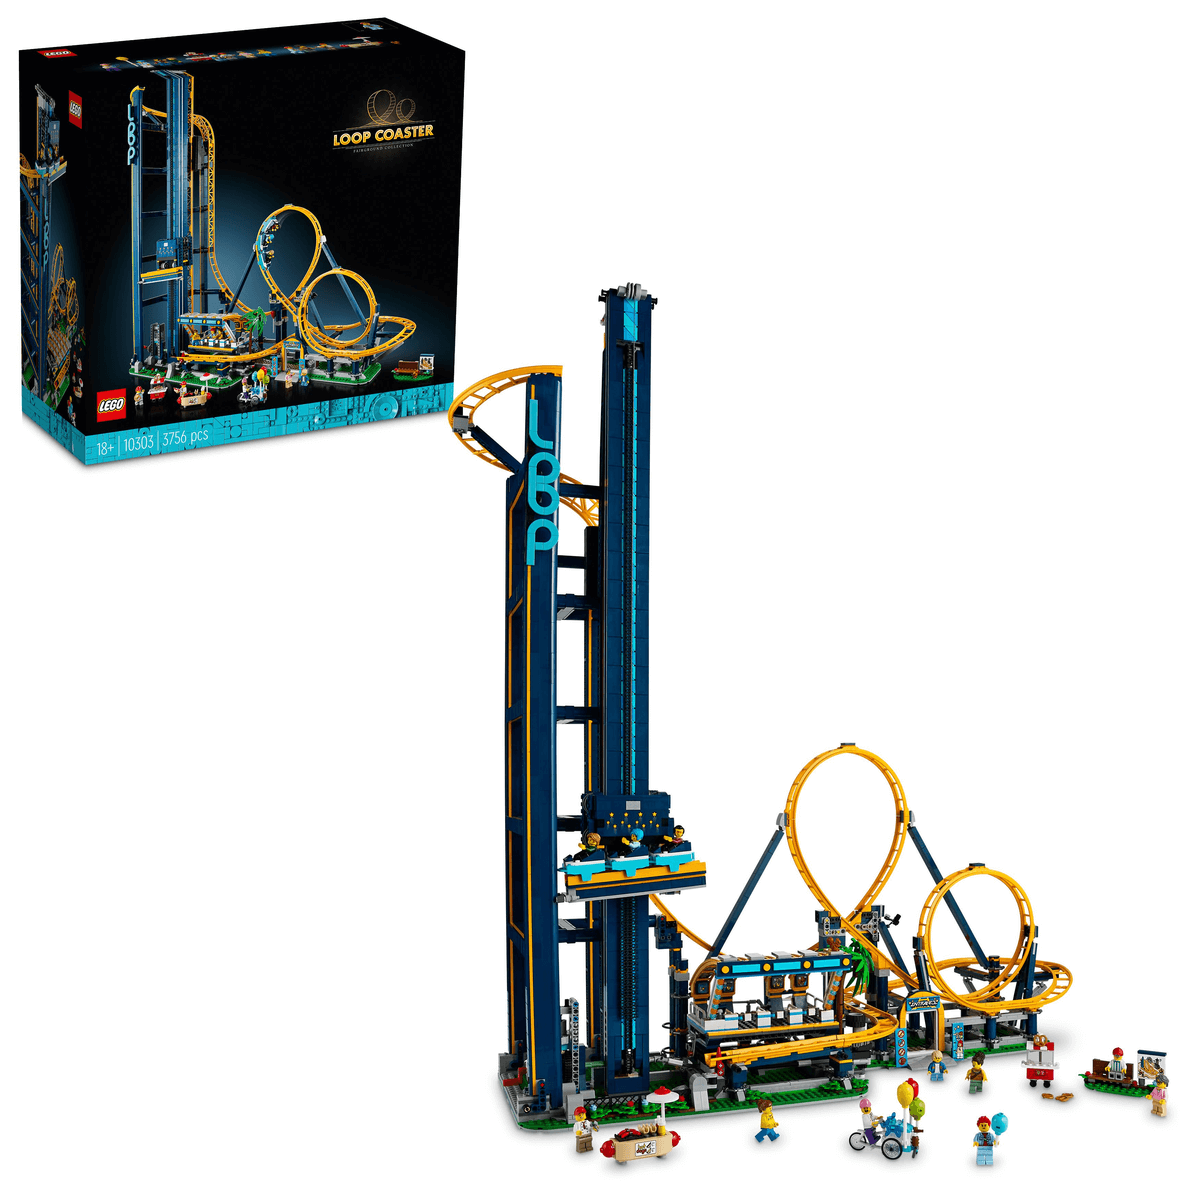 LEGO Creator Expert 10303 Loop Coaster - Brick Store NZ